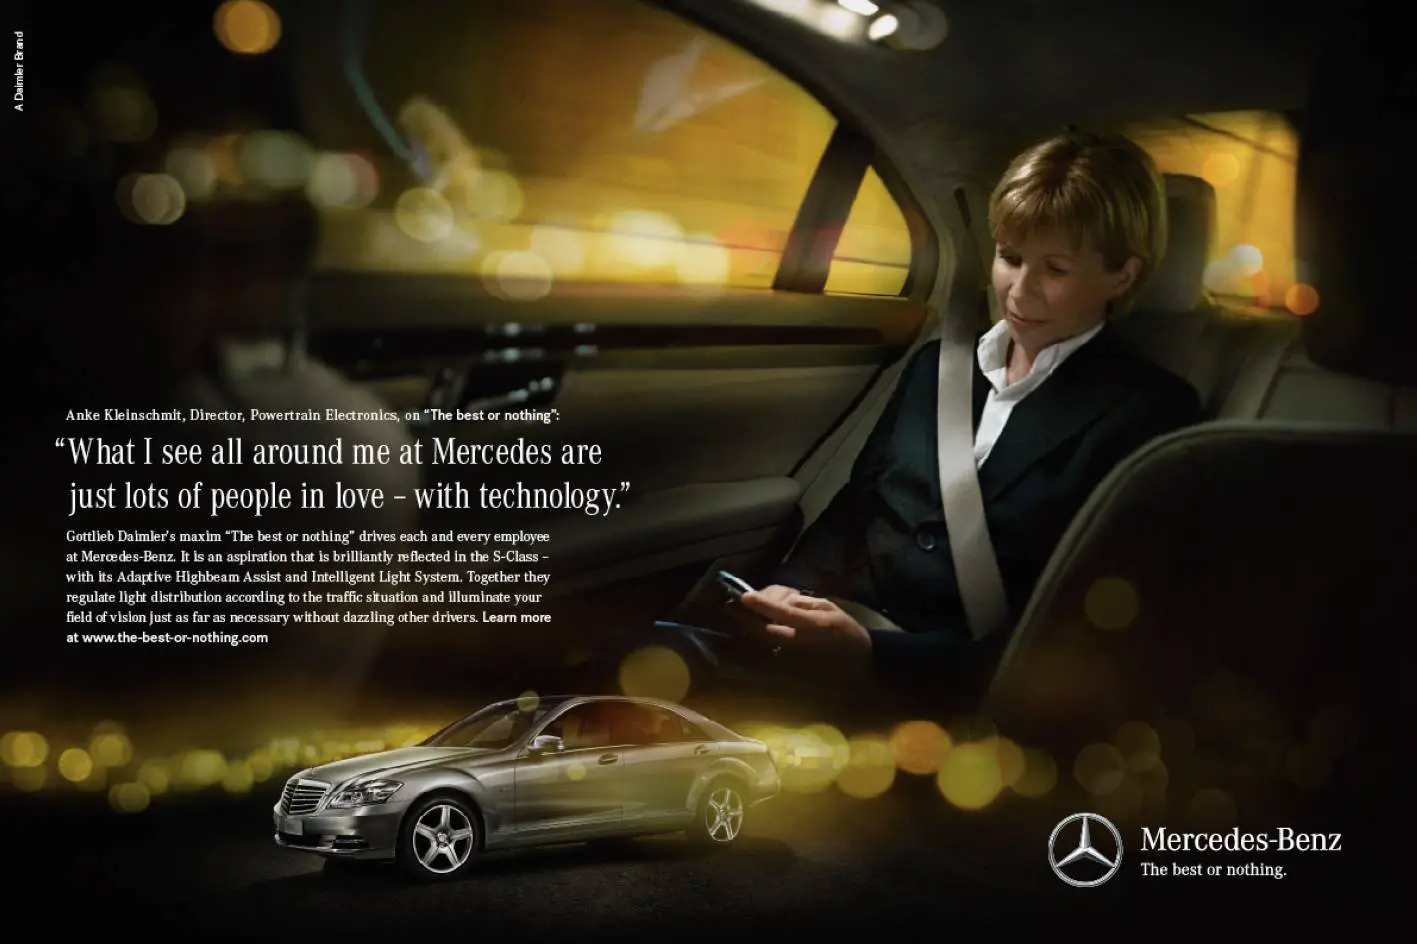 Реклама автомобилей слоганы. Мерседес Бенц the best or nothing. Слоган Mercedes-Benz. Рекламный слоган Мерседес. Слоган Мерседес Бенц.